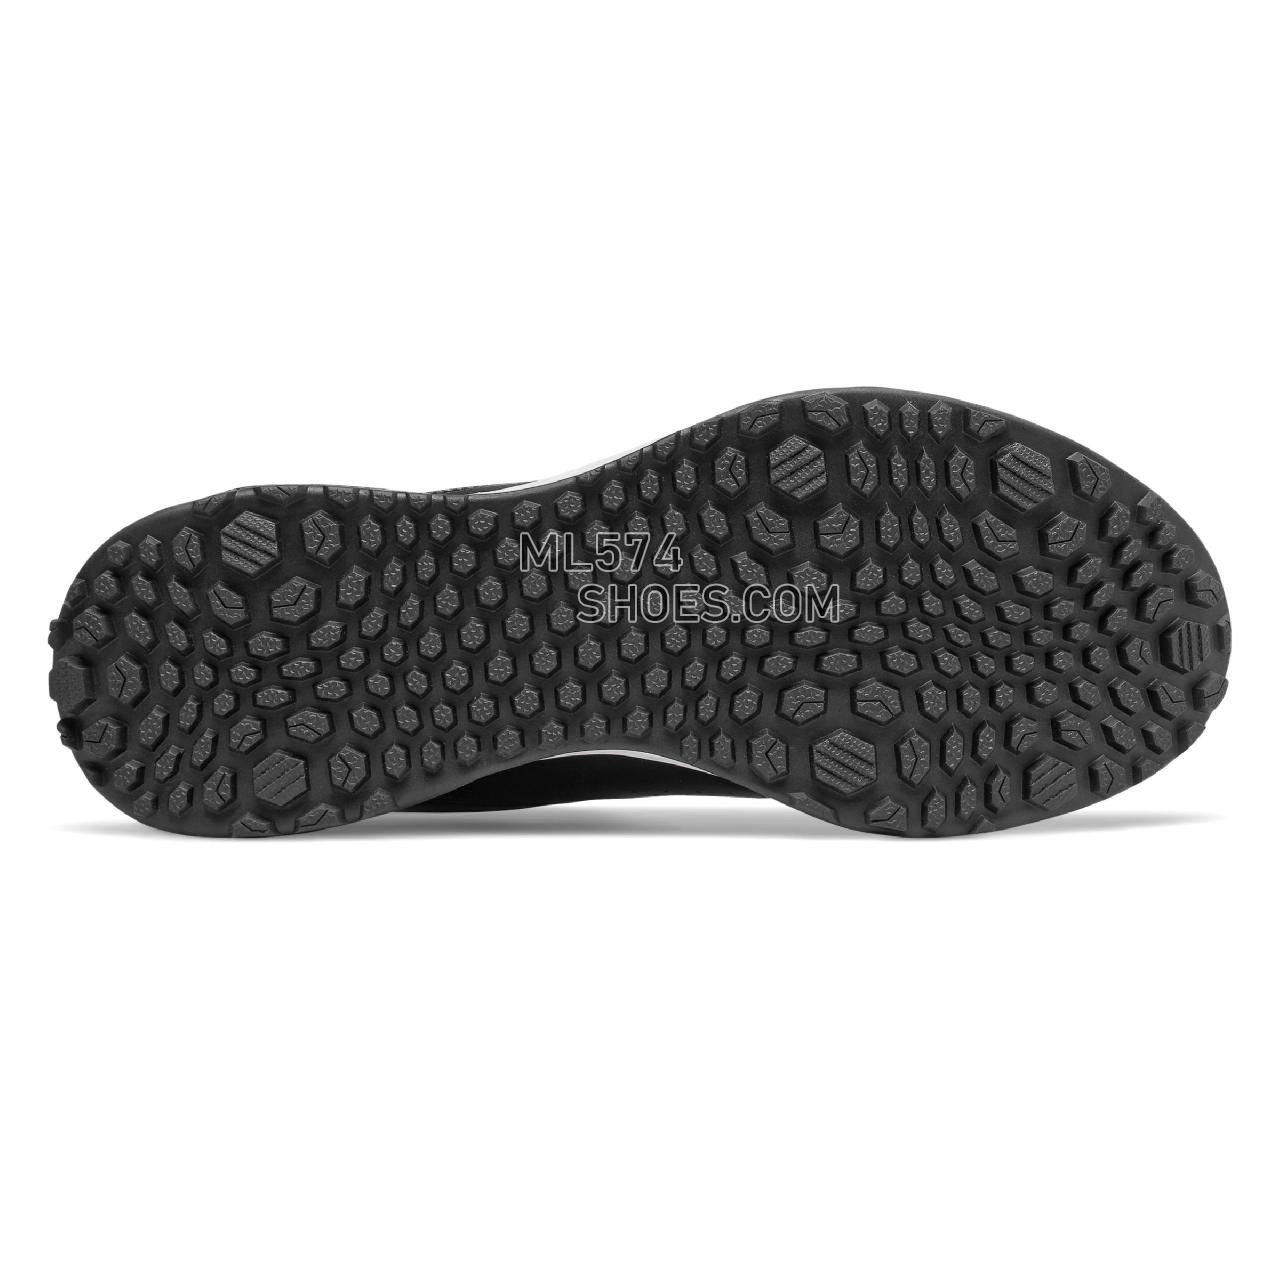 New Balance Fresh Foam 950v3 Field - Men's Umpire Footwear - Black with White - MU950XT3